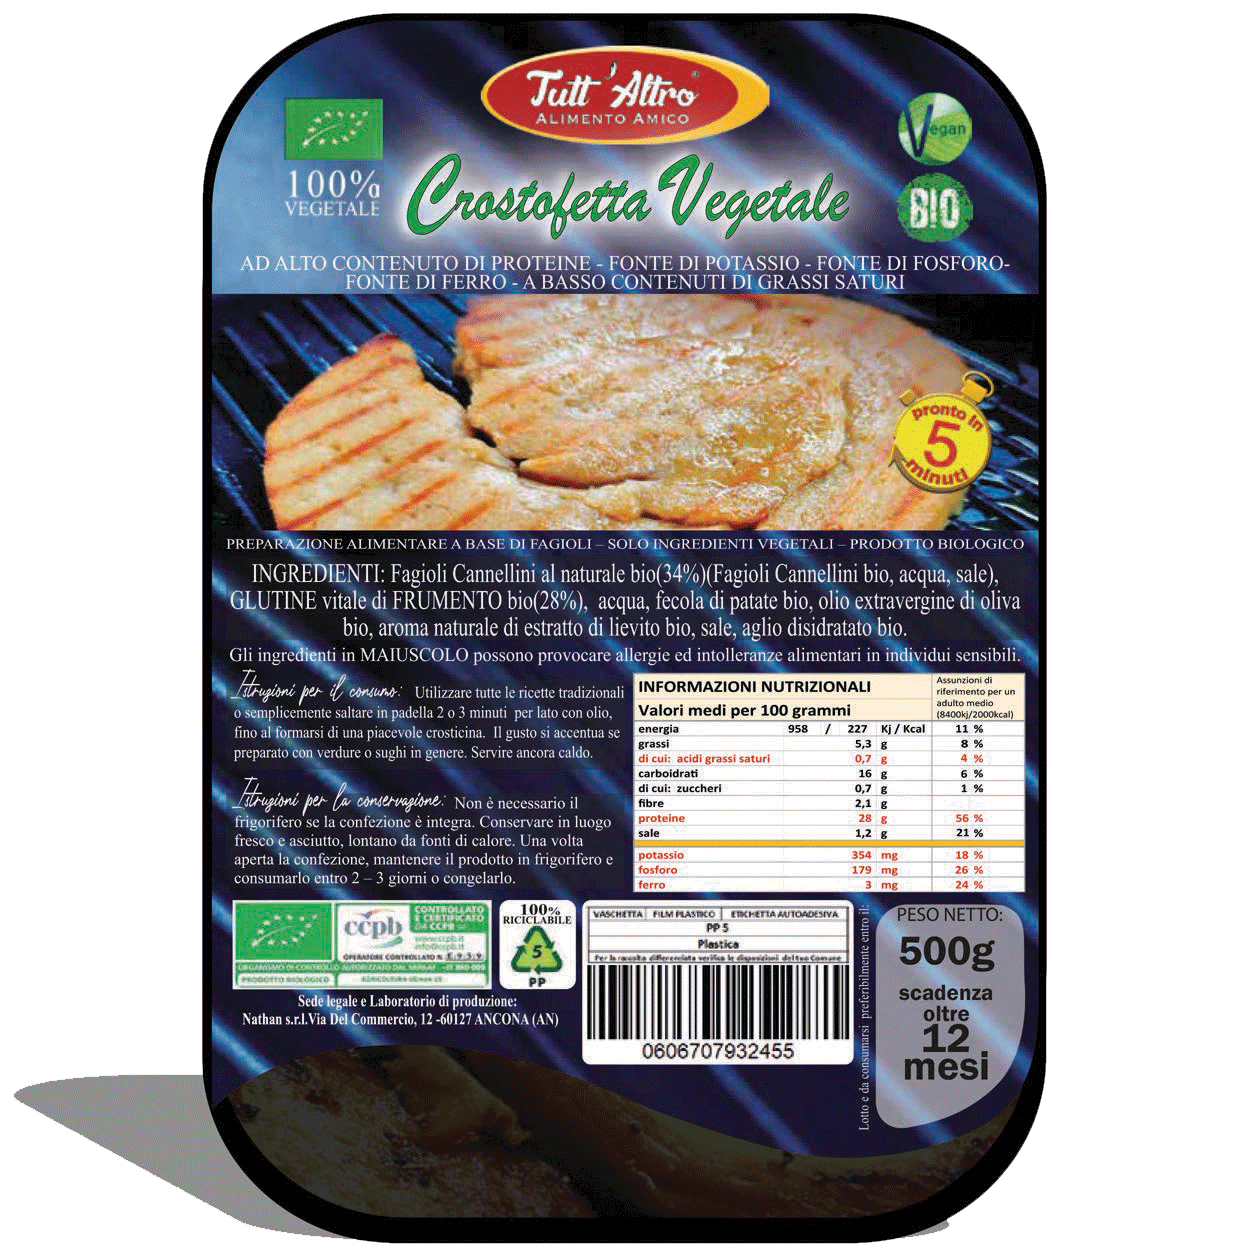 Crostofetta Vegetale - Tutt'Altro - Alimenti 100% Veg&Bio